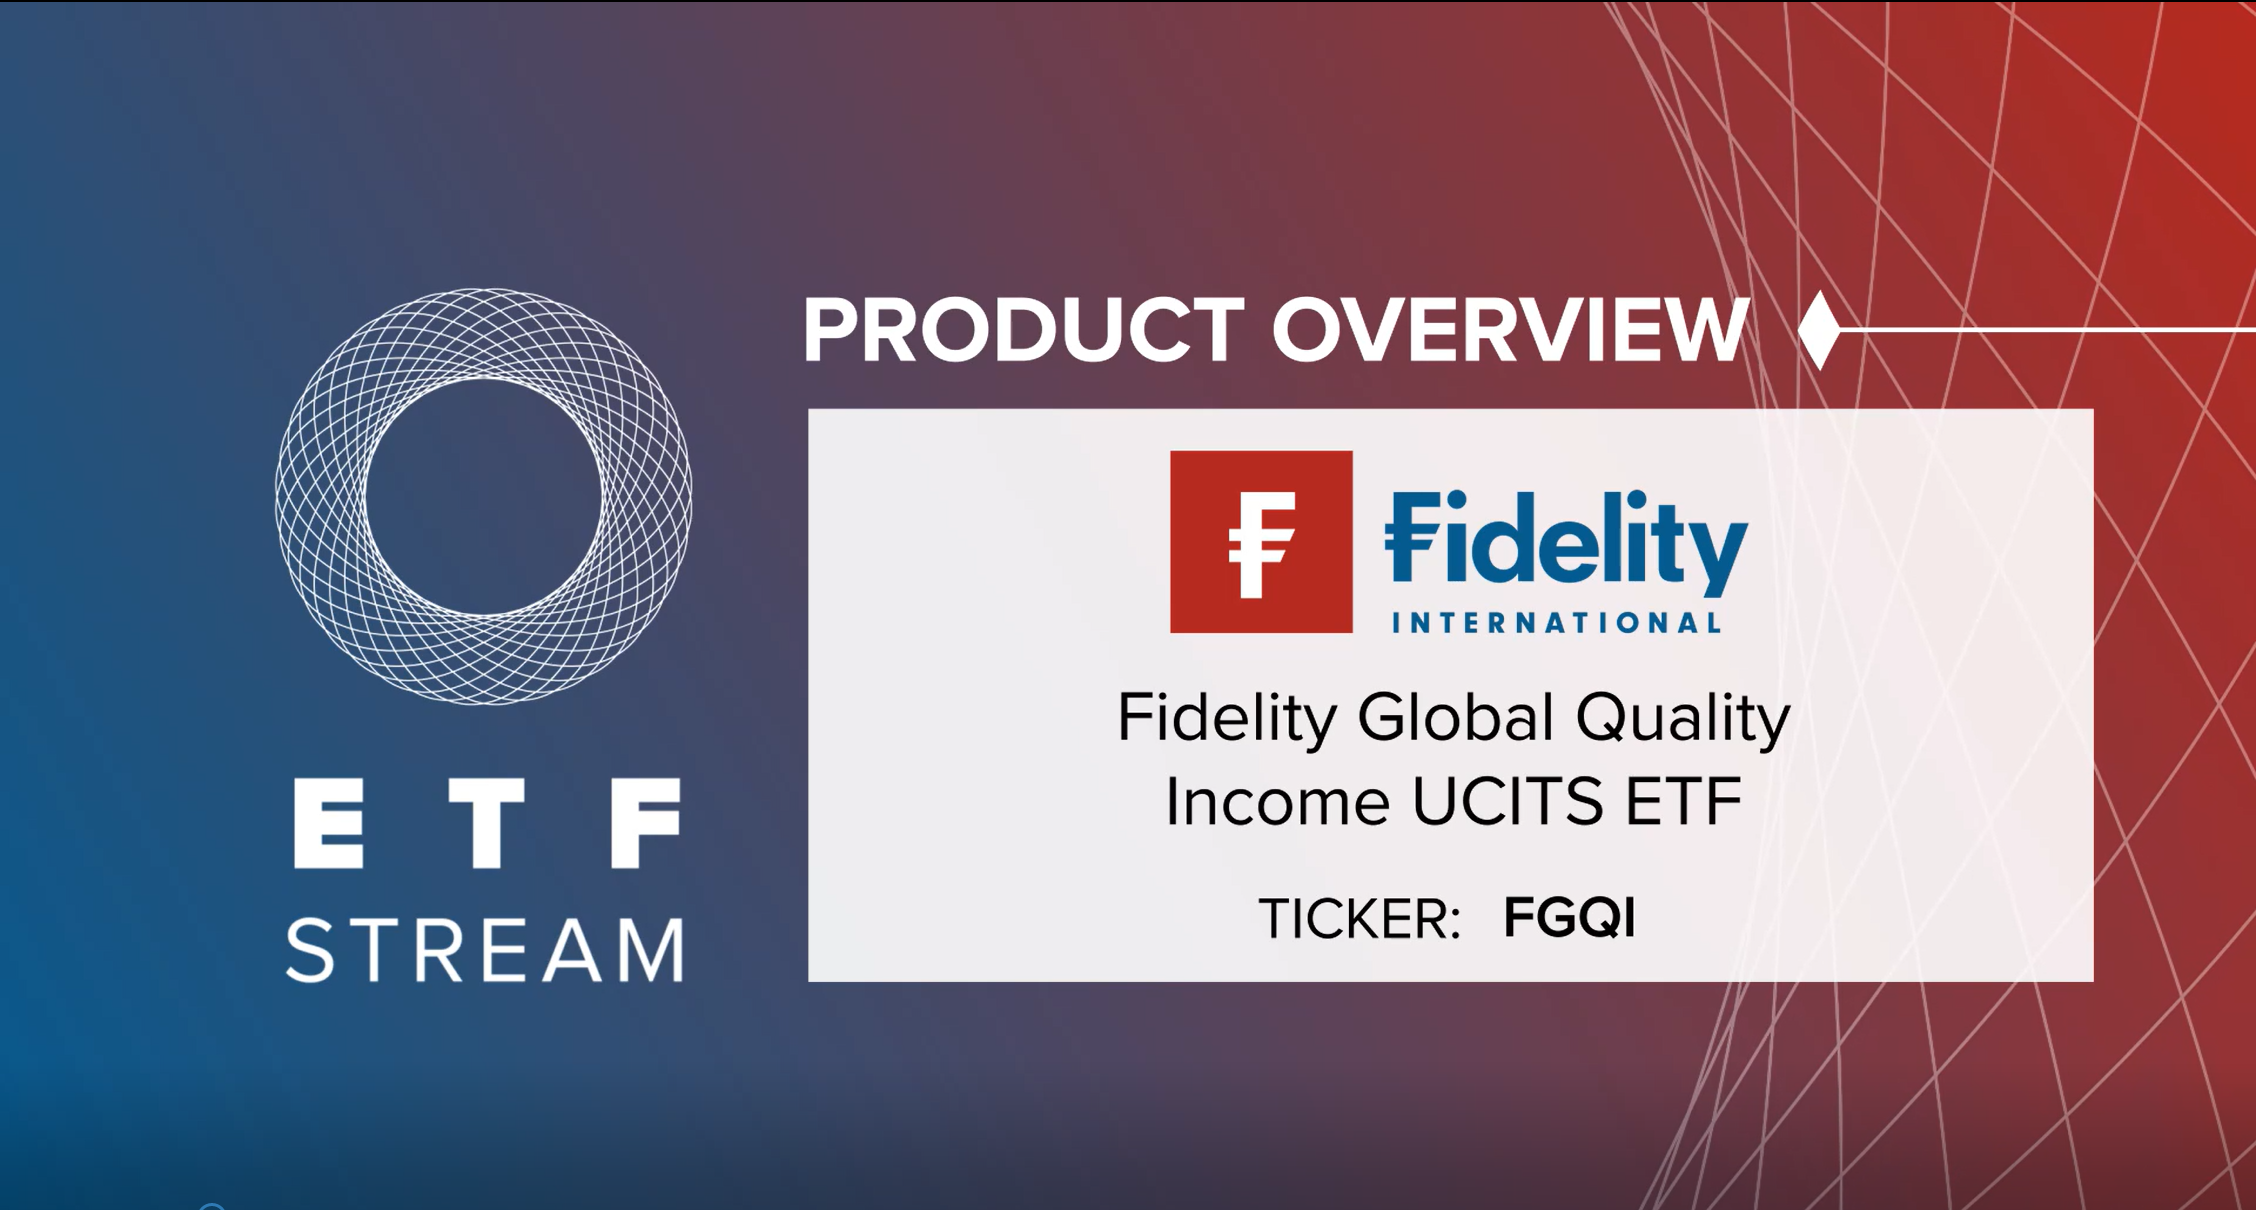 Fidelity Global Quality snapshot